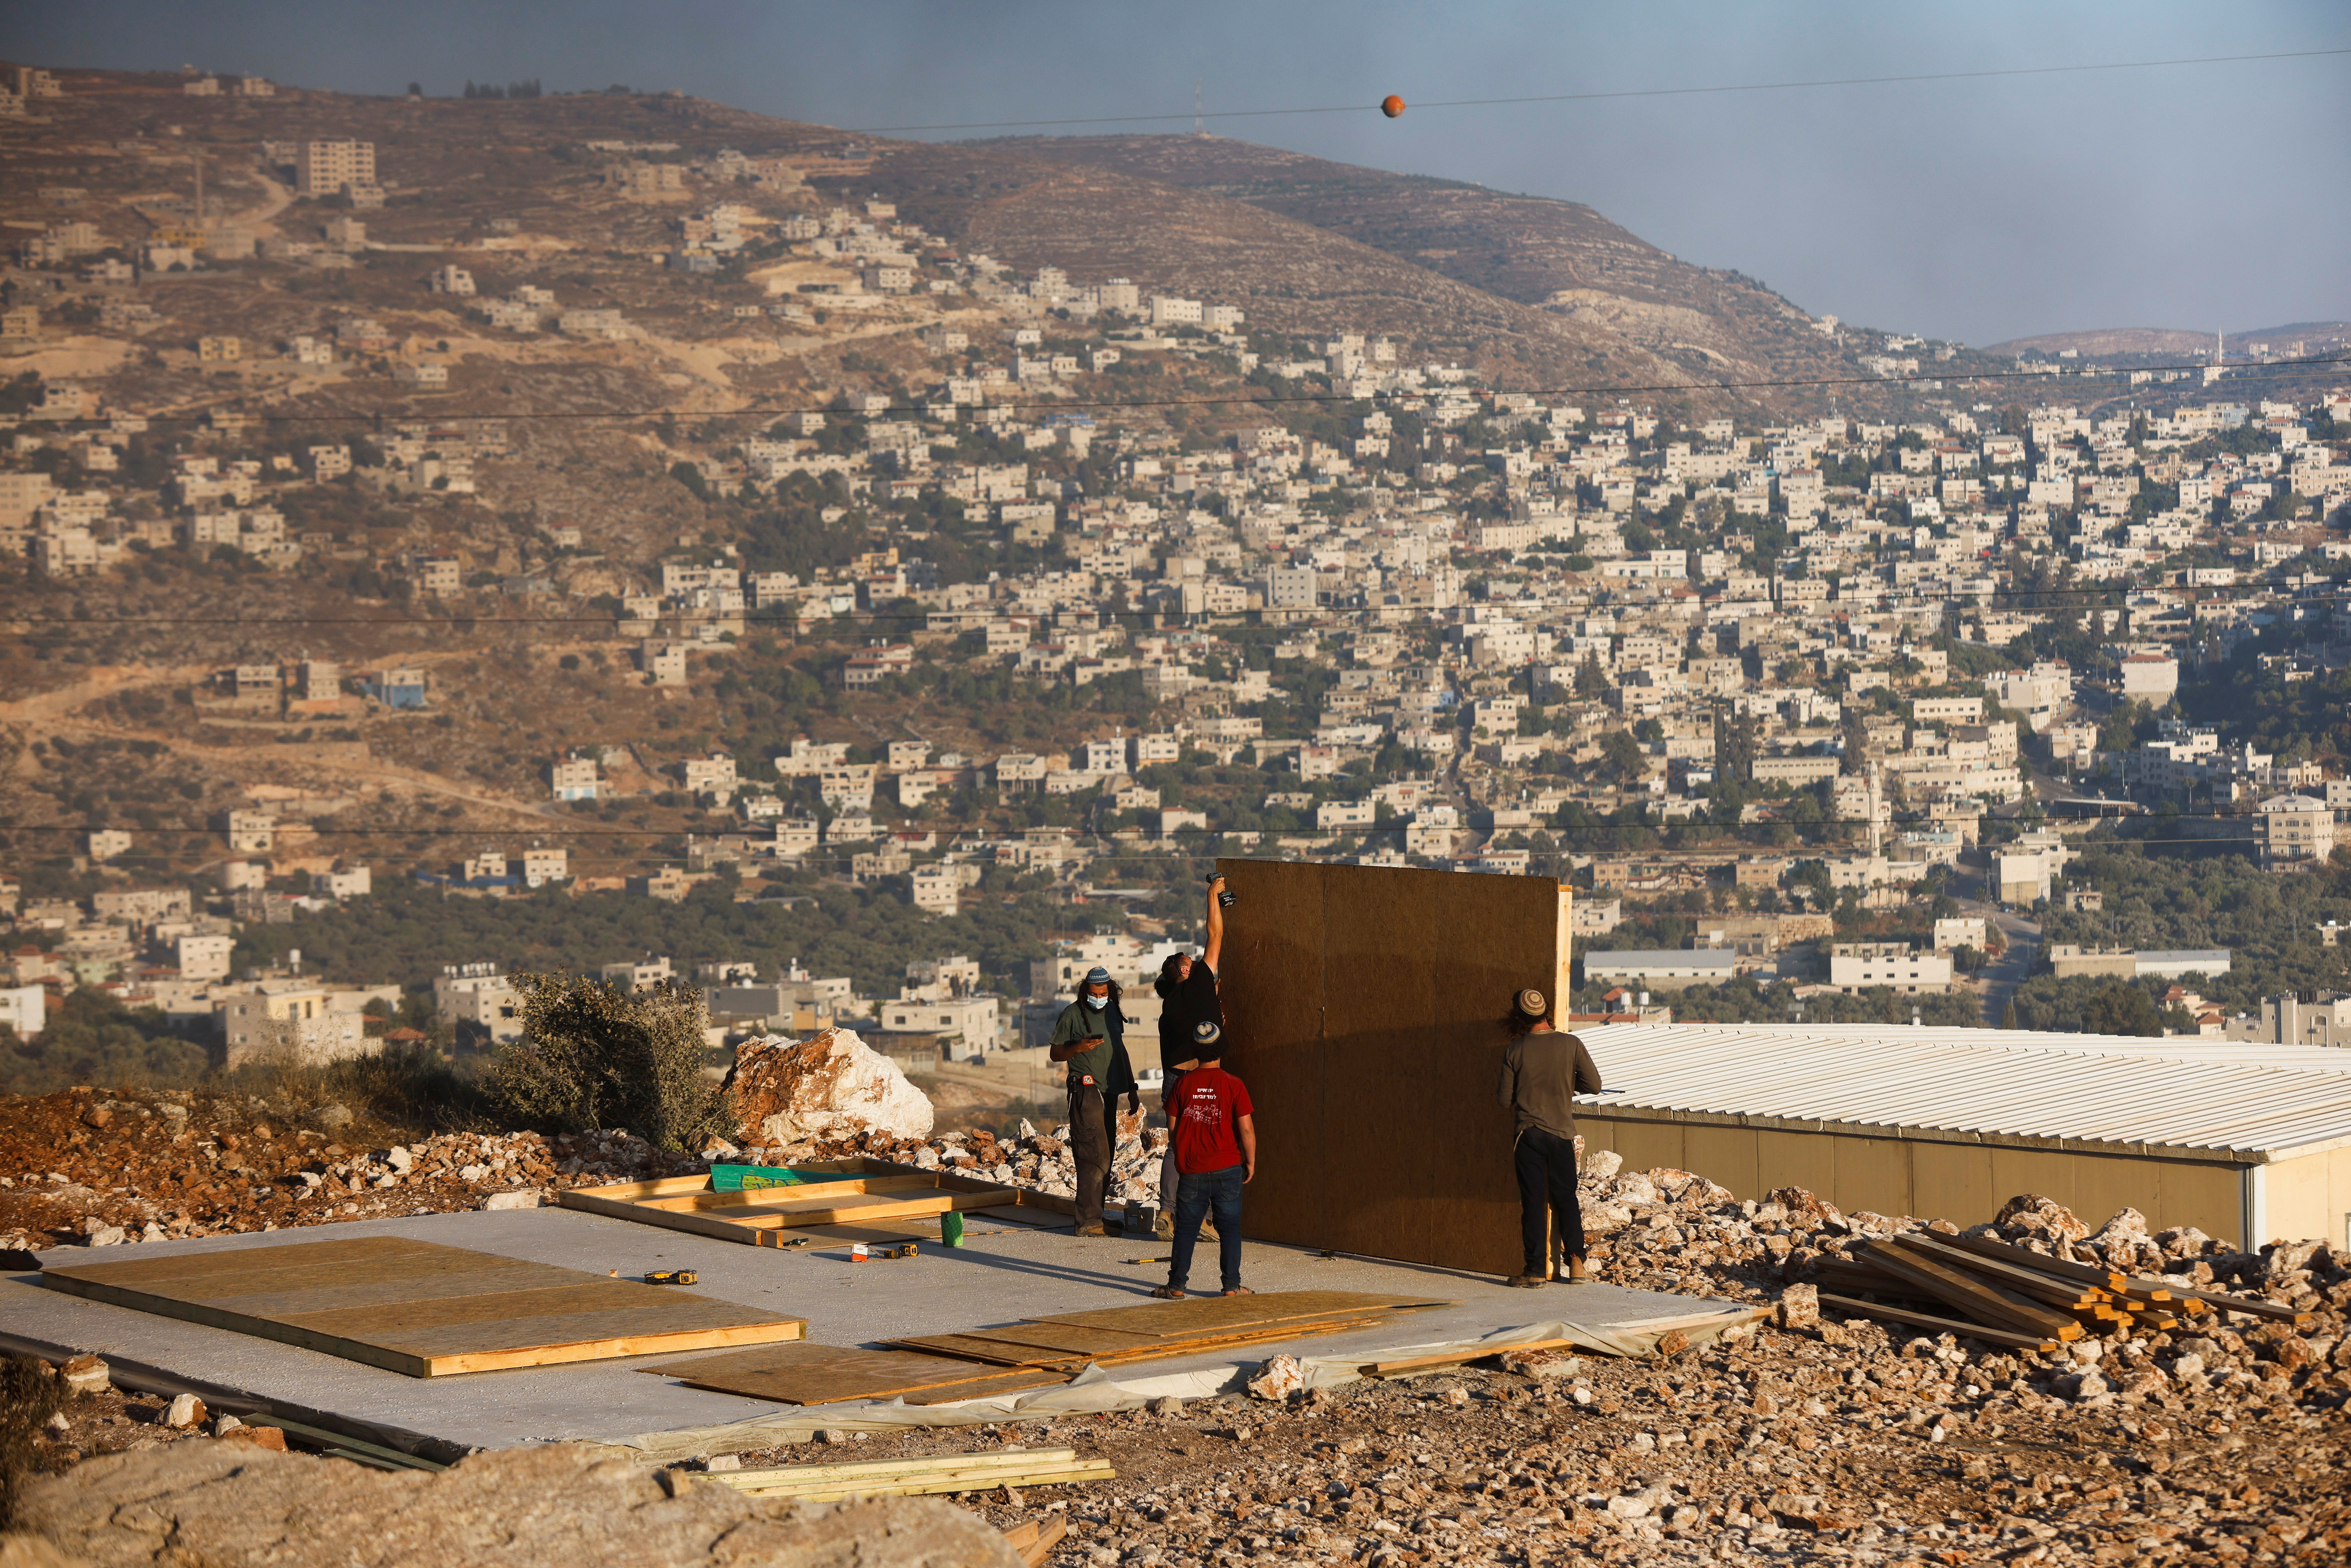 Lasers and bonfires light up battle over new Israeli settlement